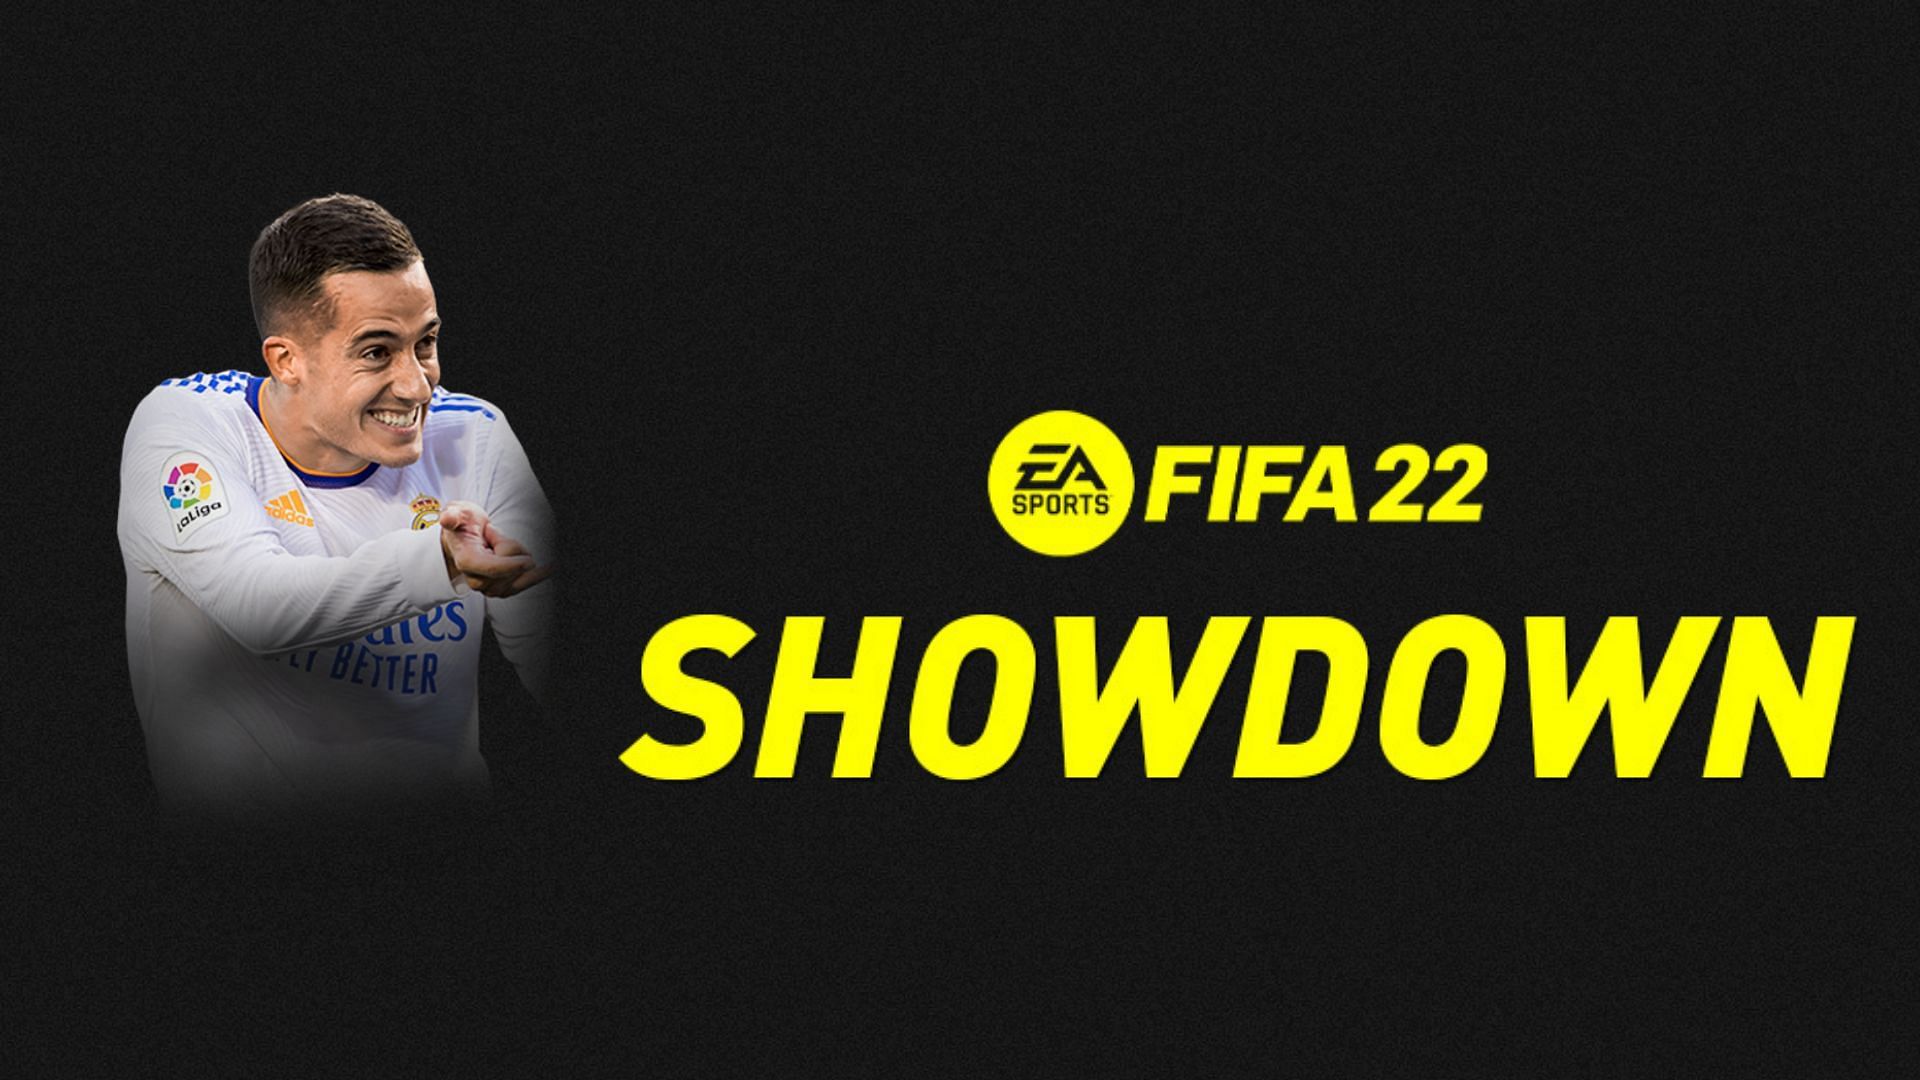 Lucas Vazquez Showdown SBC is live in FIFA 22 Ultimate Team (Image via Sportskeeda)